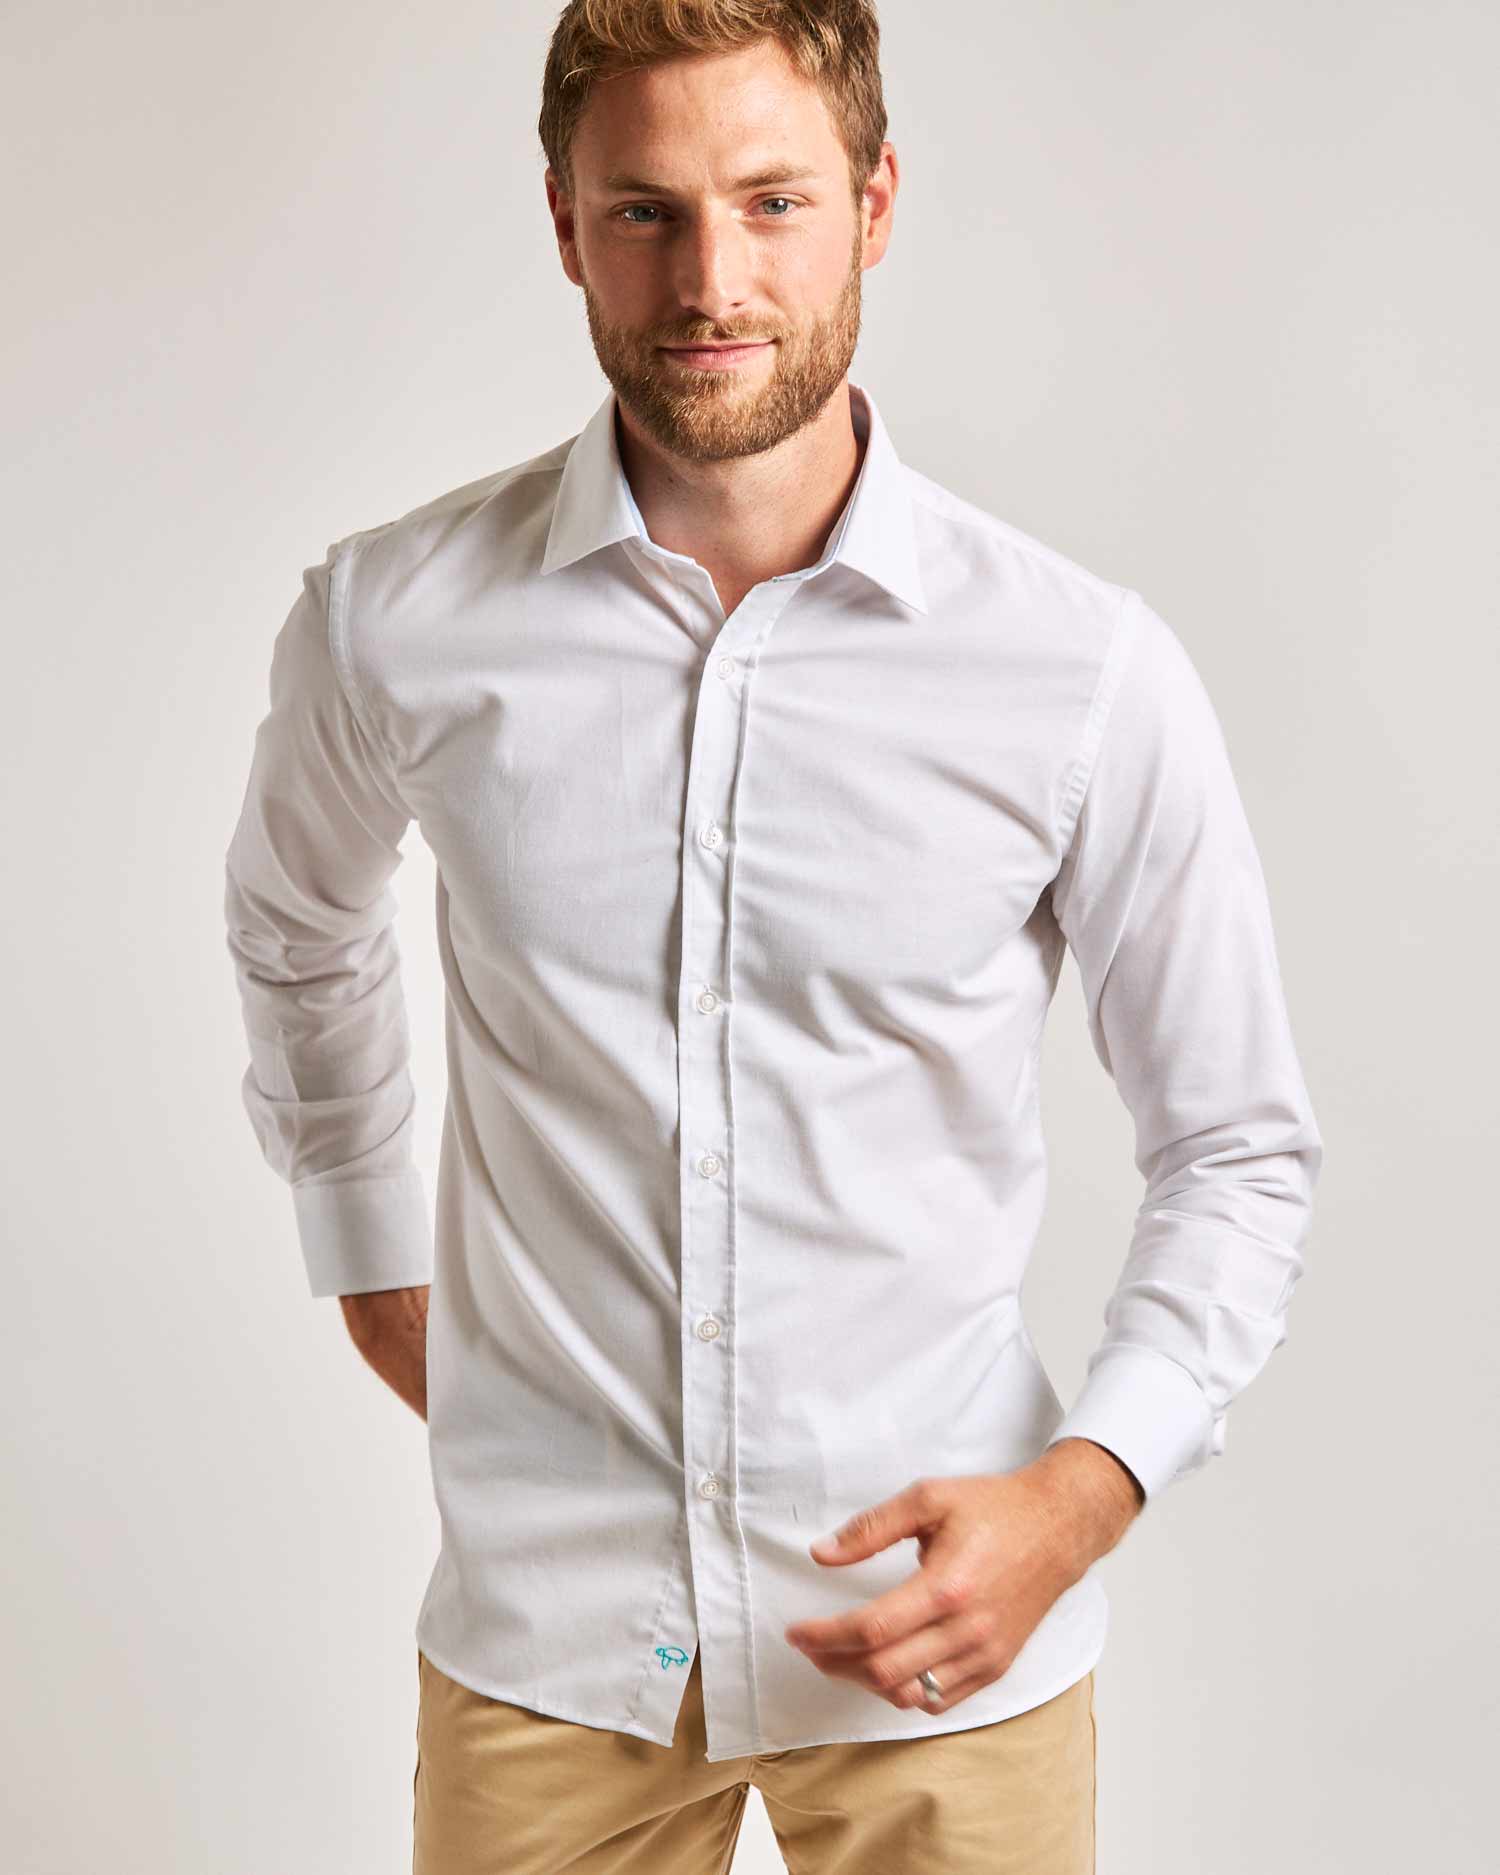 White Oxford Shirt - Traditional Collar Shirts